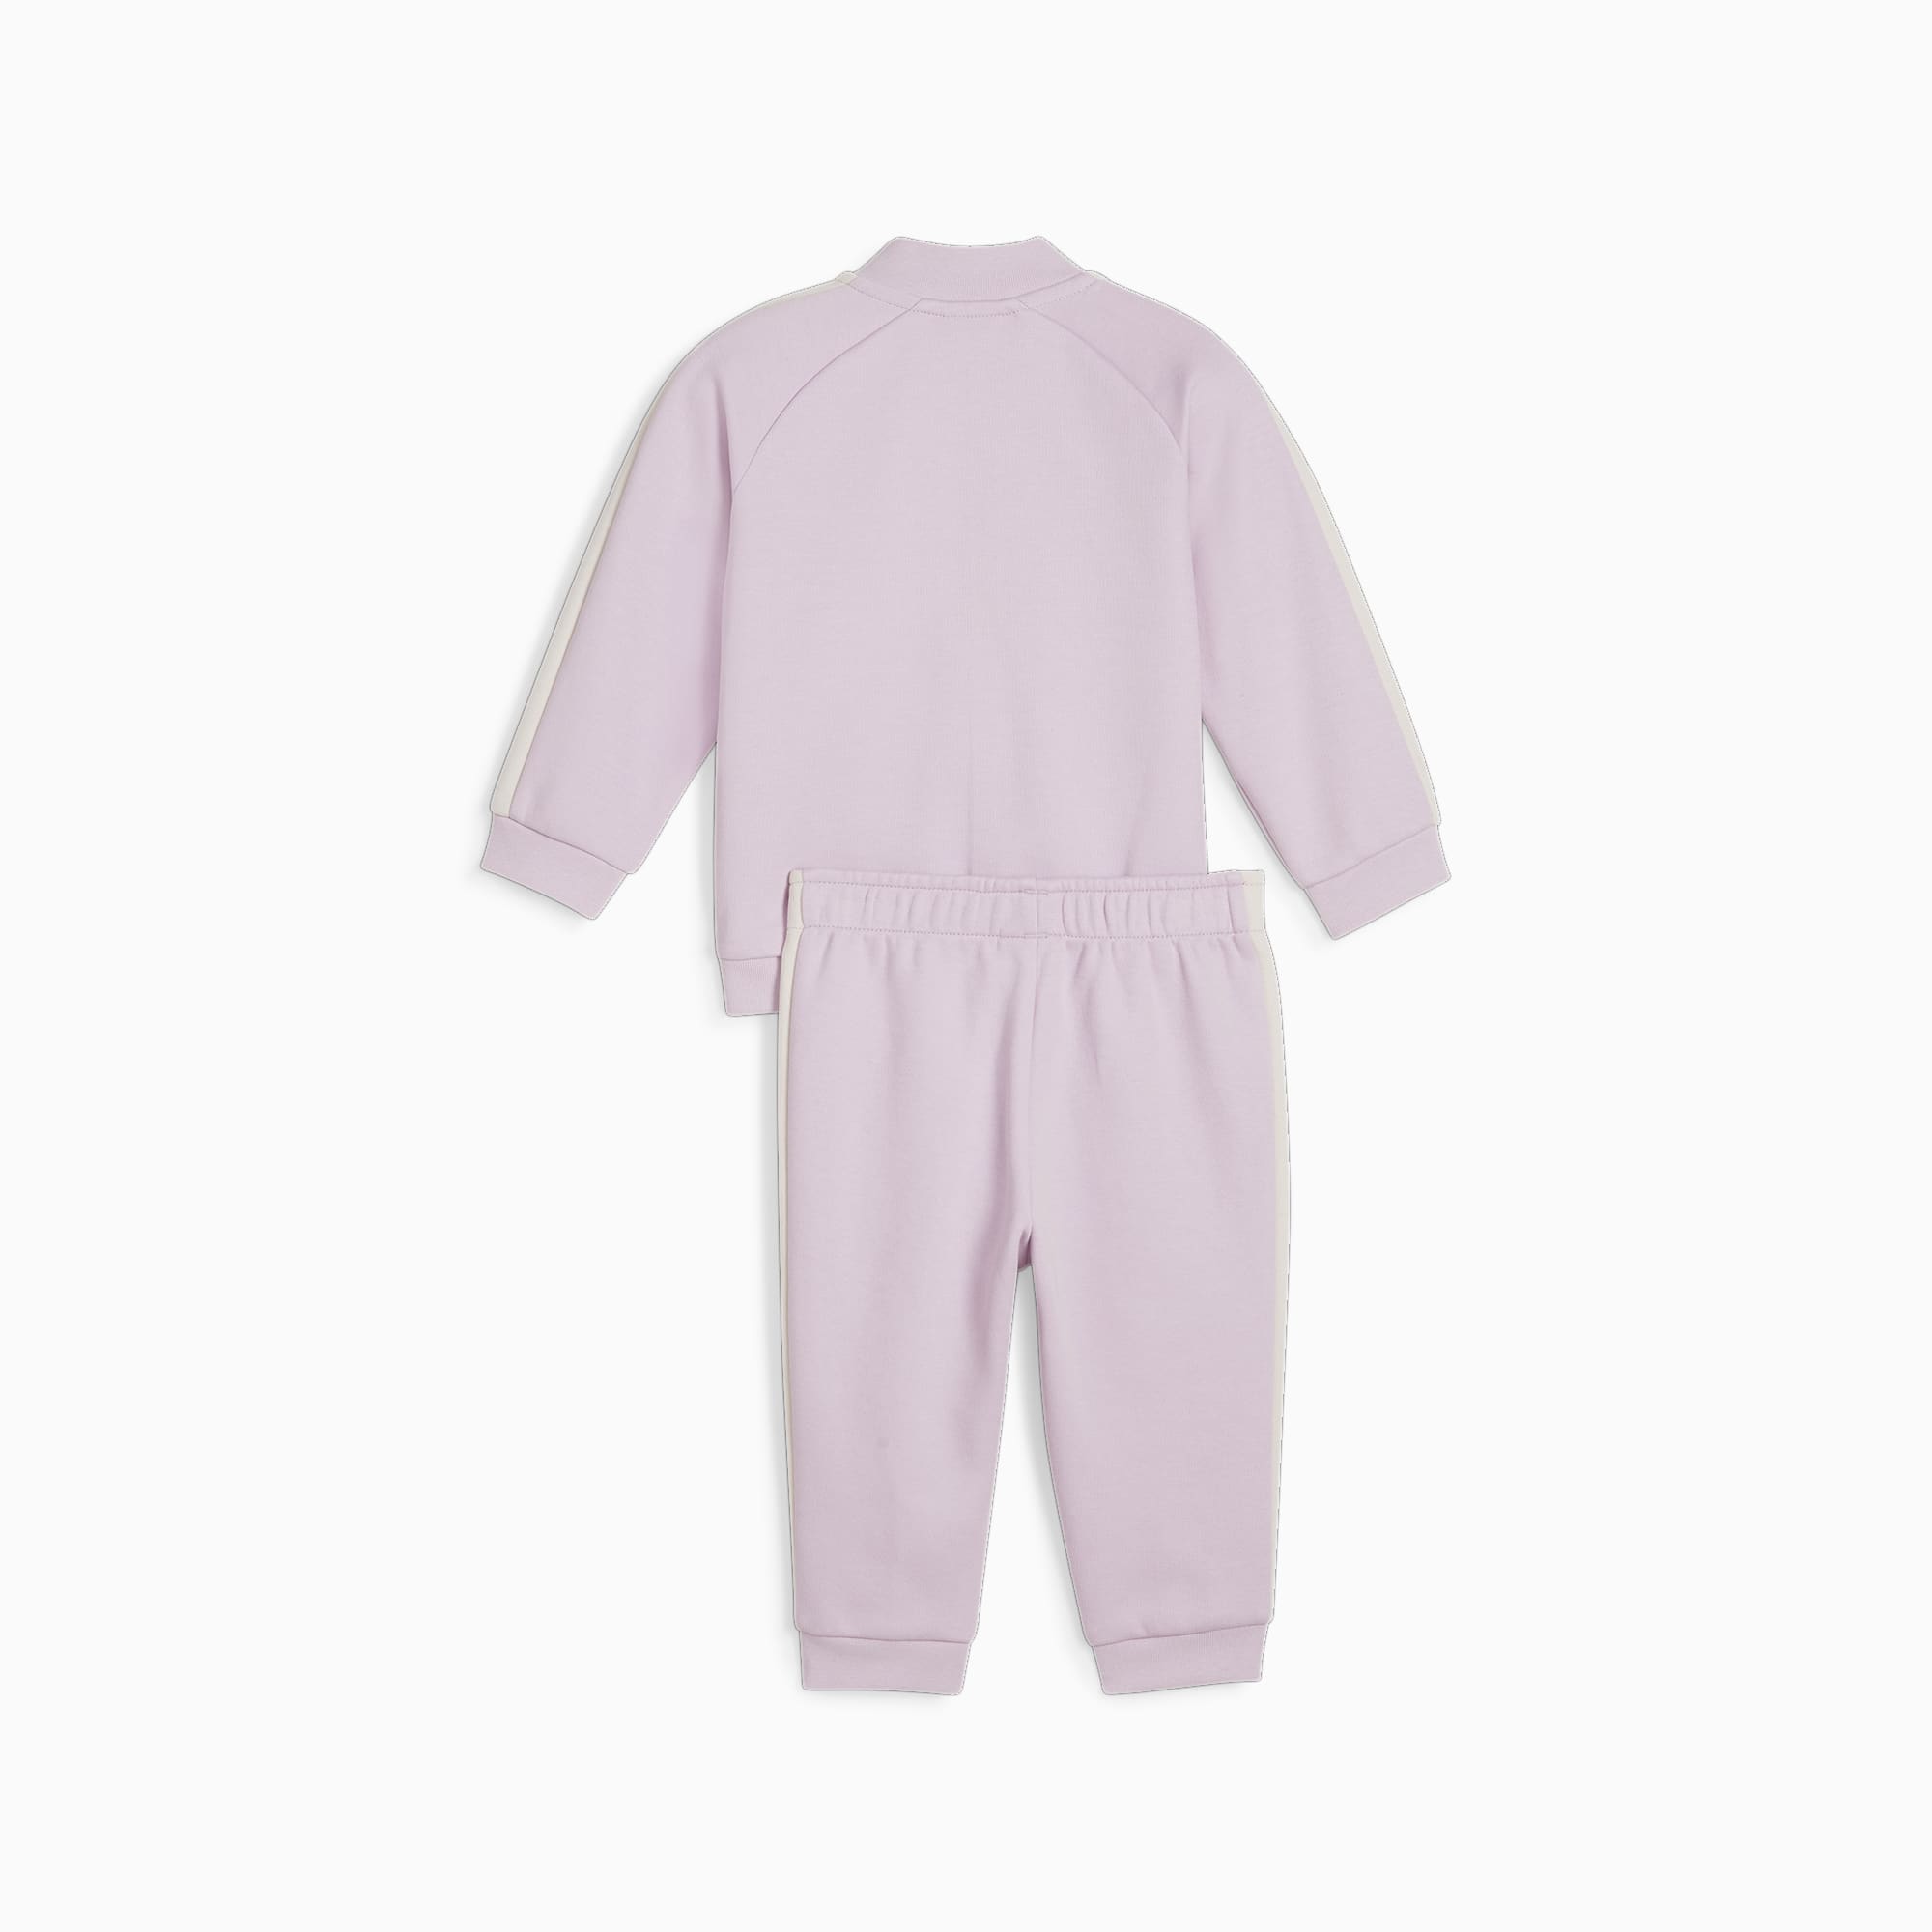 PUMA MINICATS T7 ICONIC Trainingsanzug Baby Für Kinder, Lila, Größe: 62, Kleidung